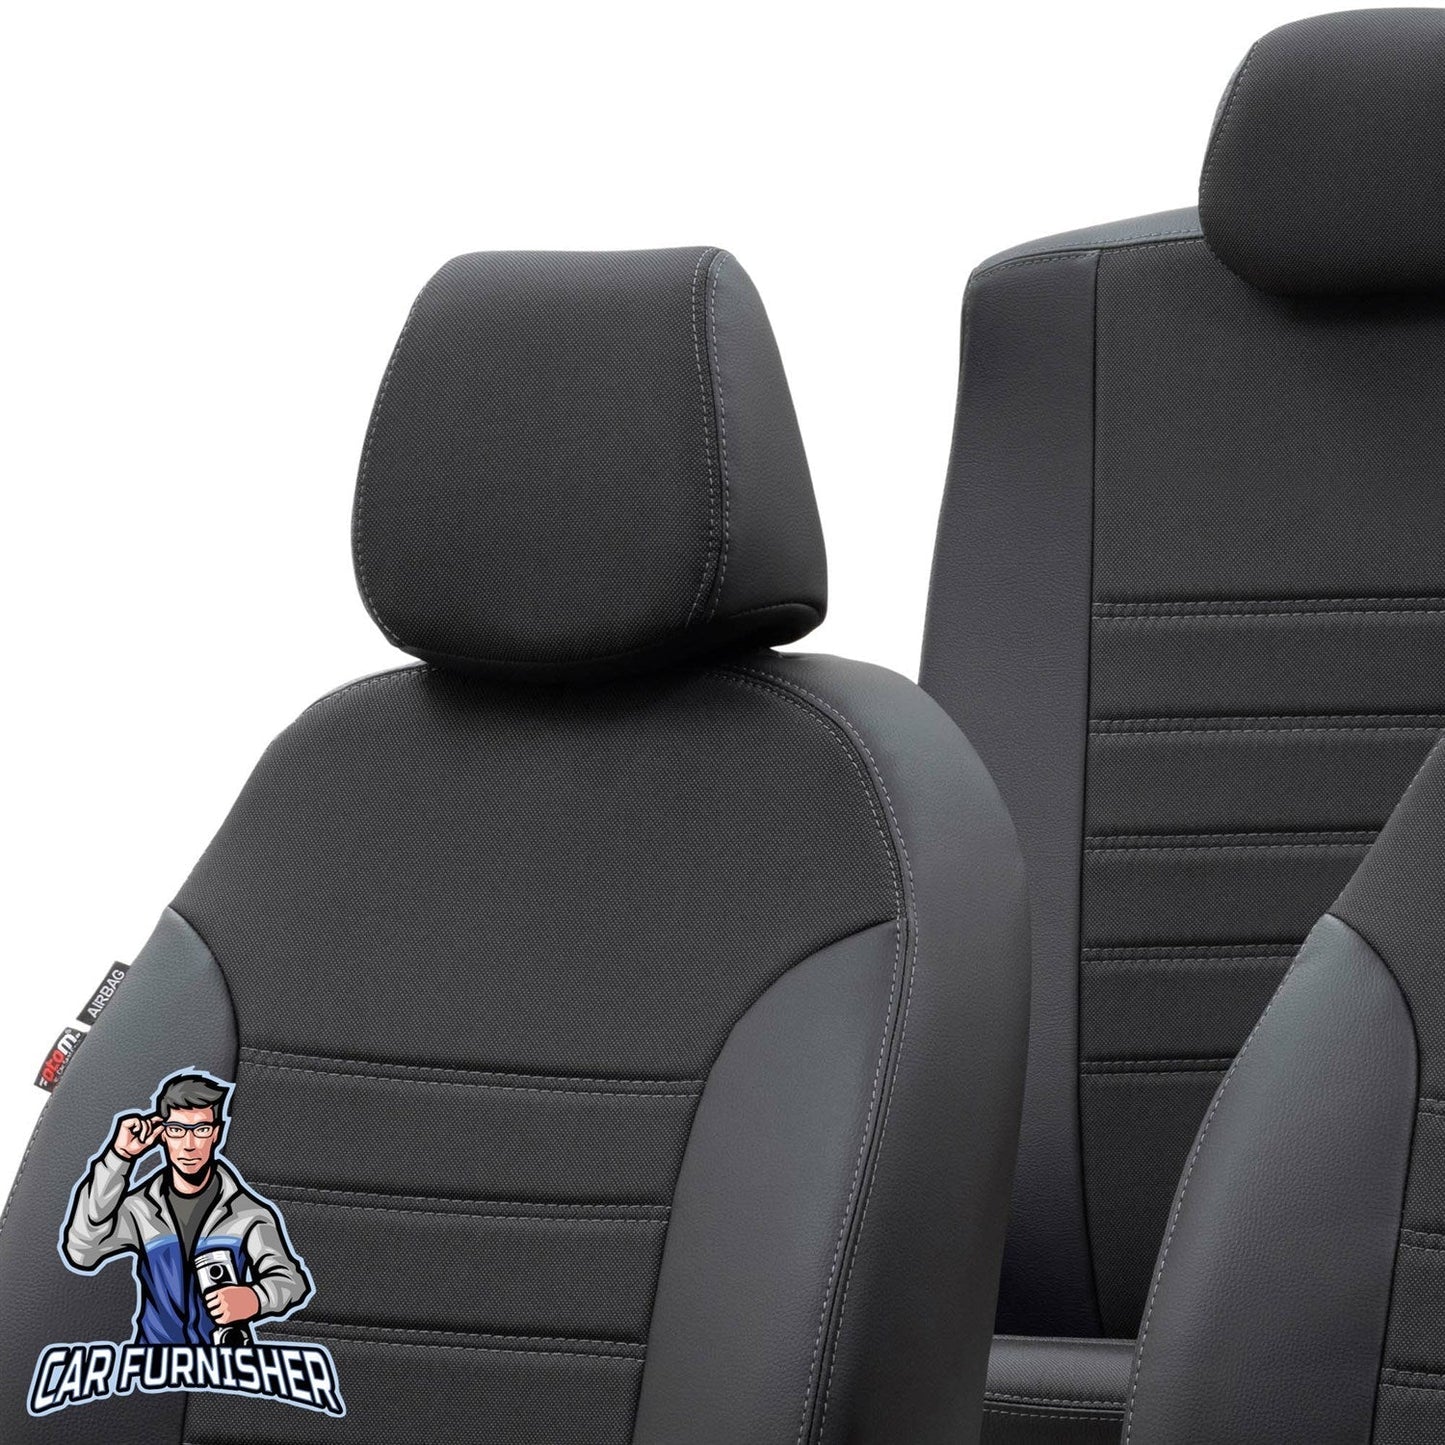 Iveco Eurocargo Seat Cover Original Jacquard Design Black Leather & Jacquard Fabric